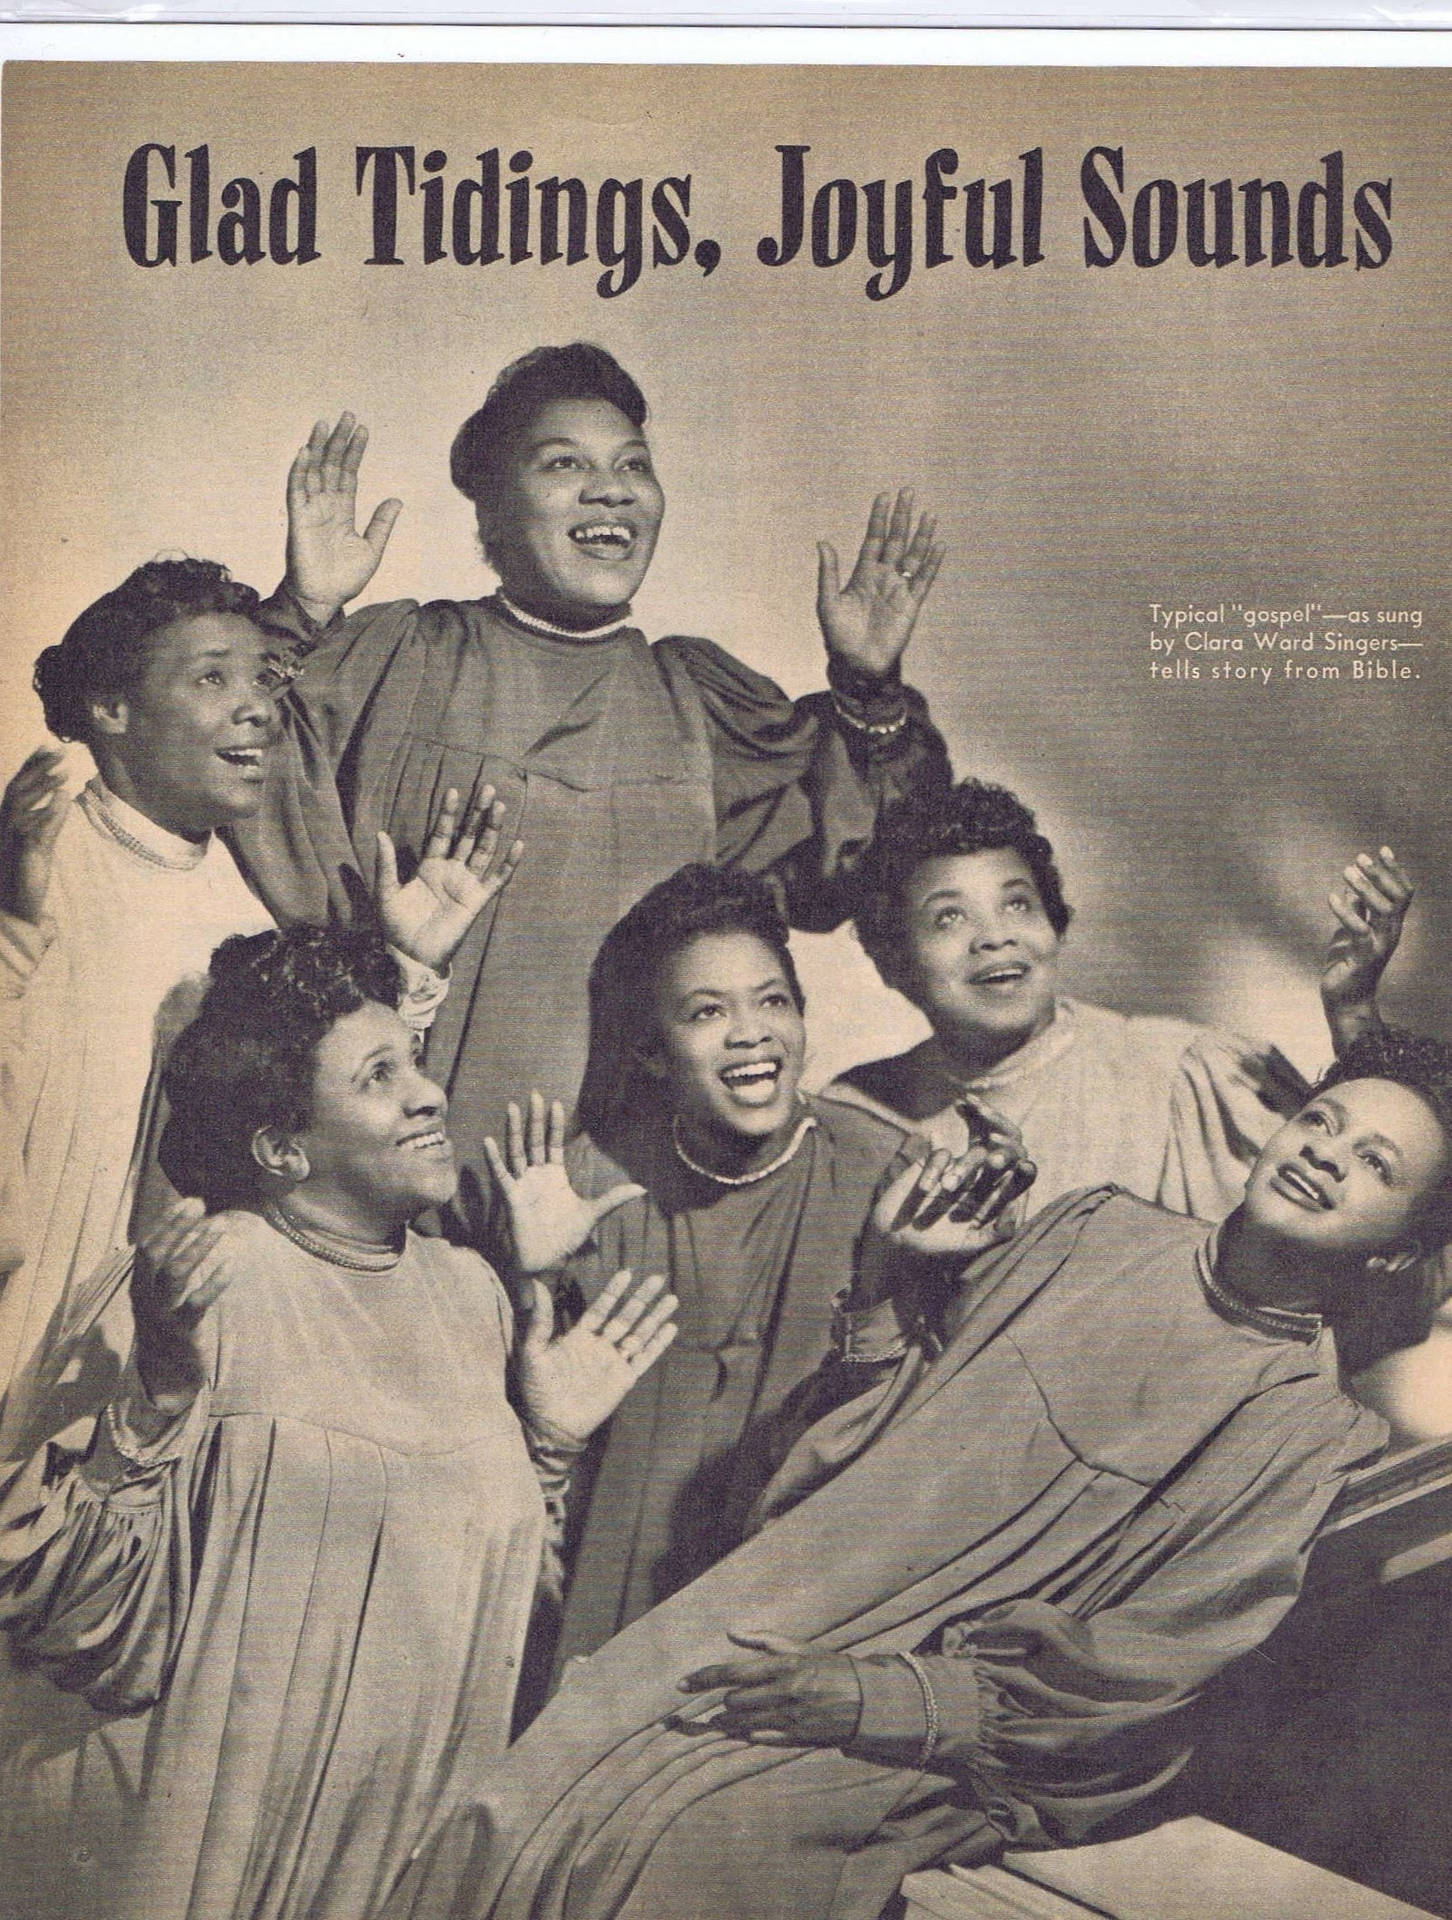 Clara Wars Singers Glad Tiding Joyful Sounds Wallpaper